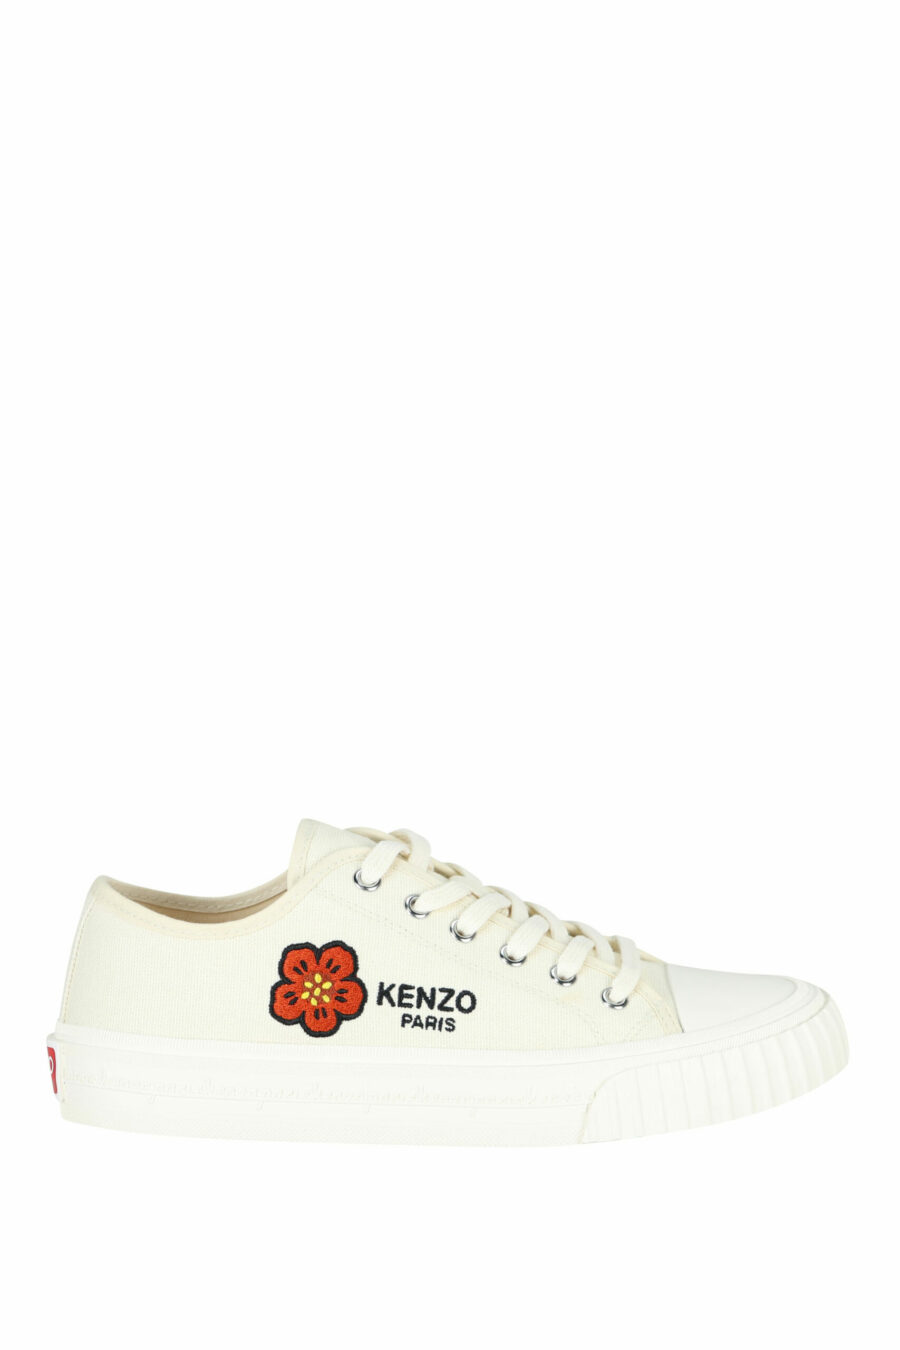 Zapatillas color crema "kenzo foxy" con logo "boke flower" - 3612230647220 scaled